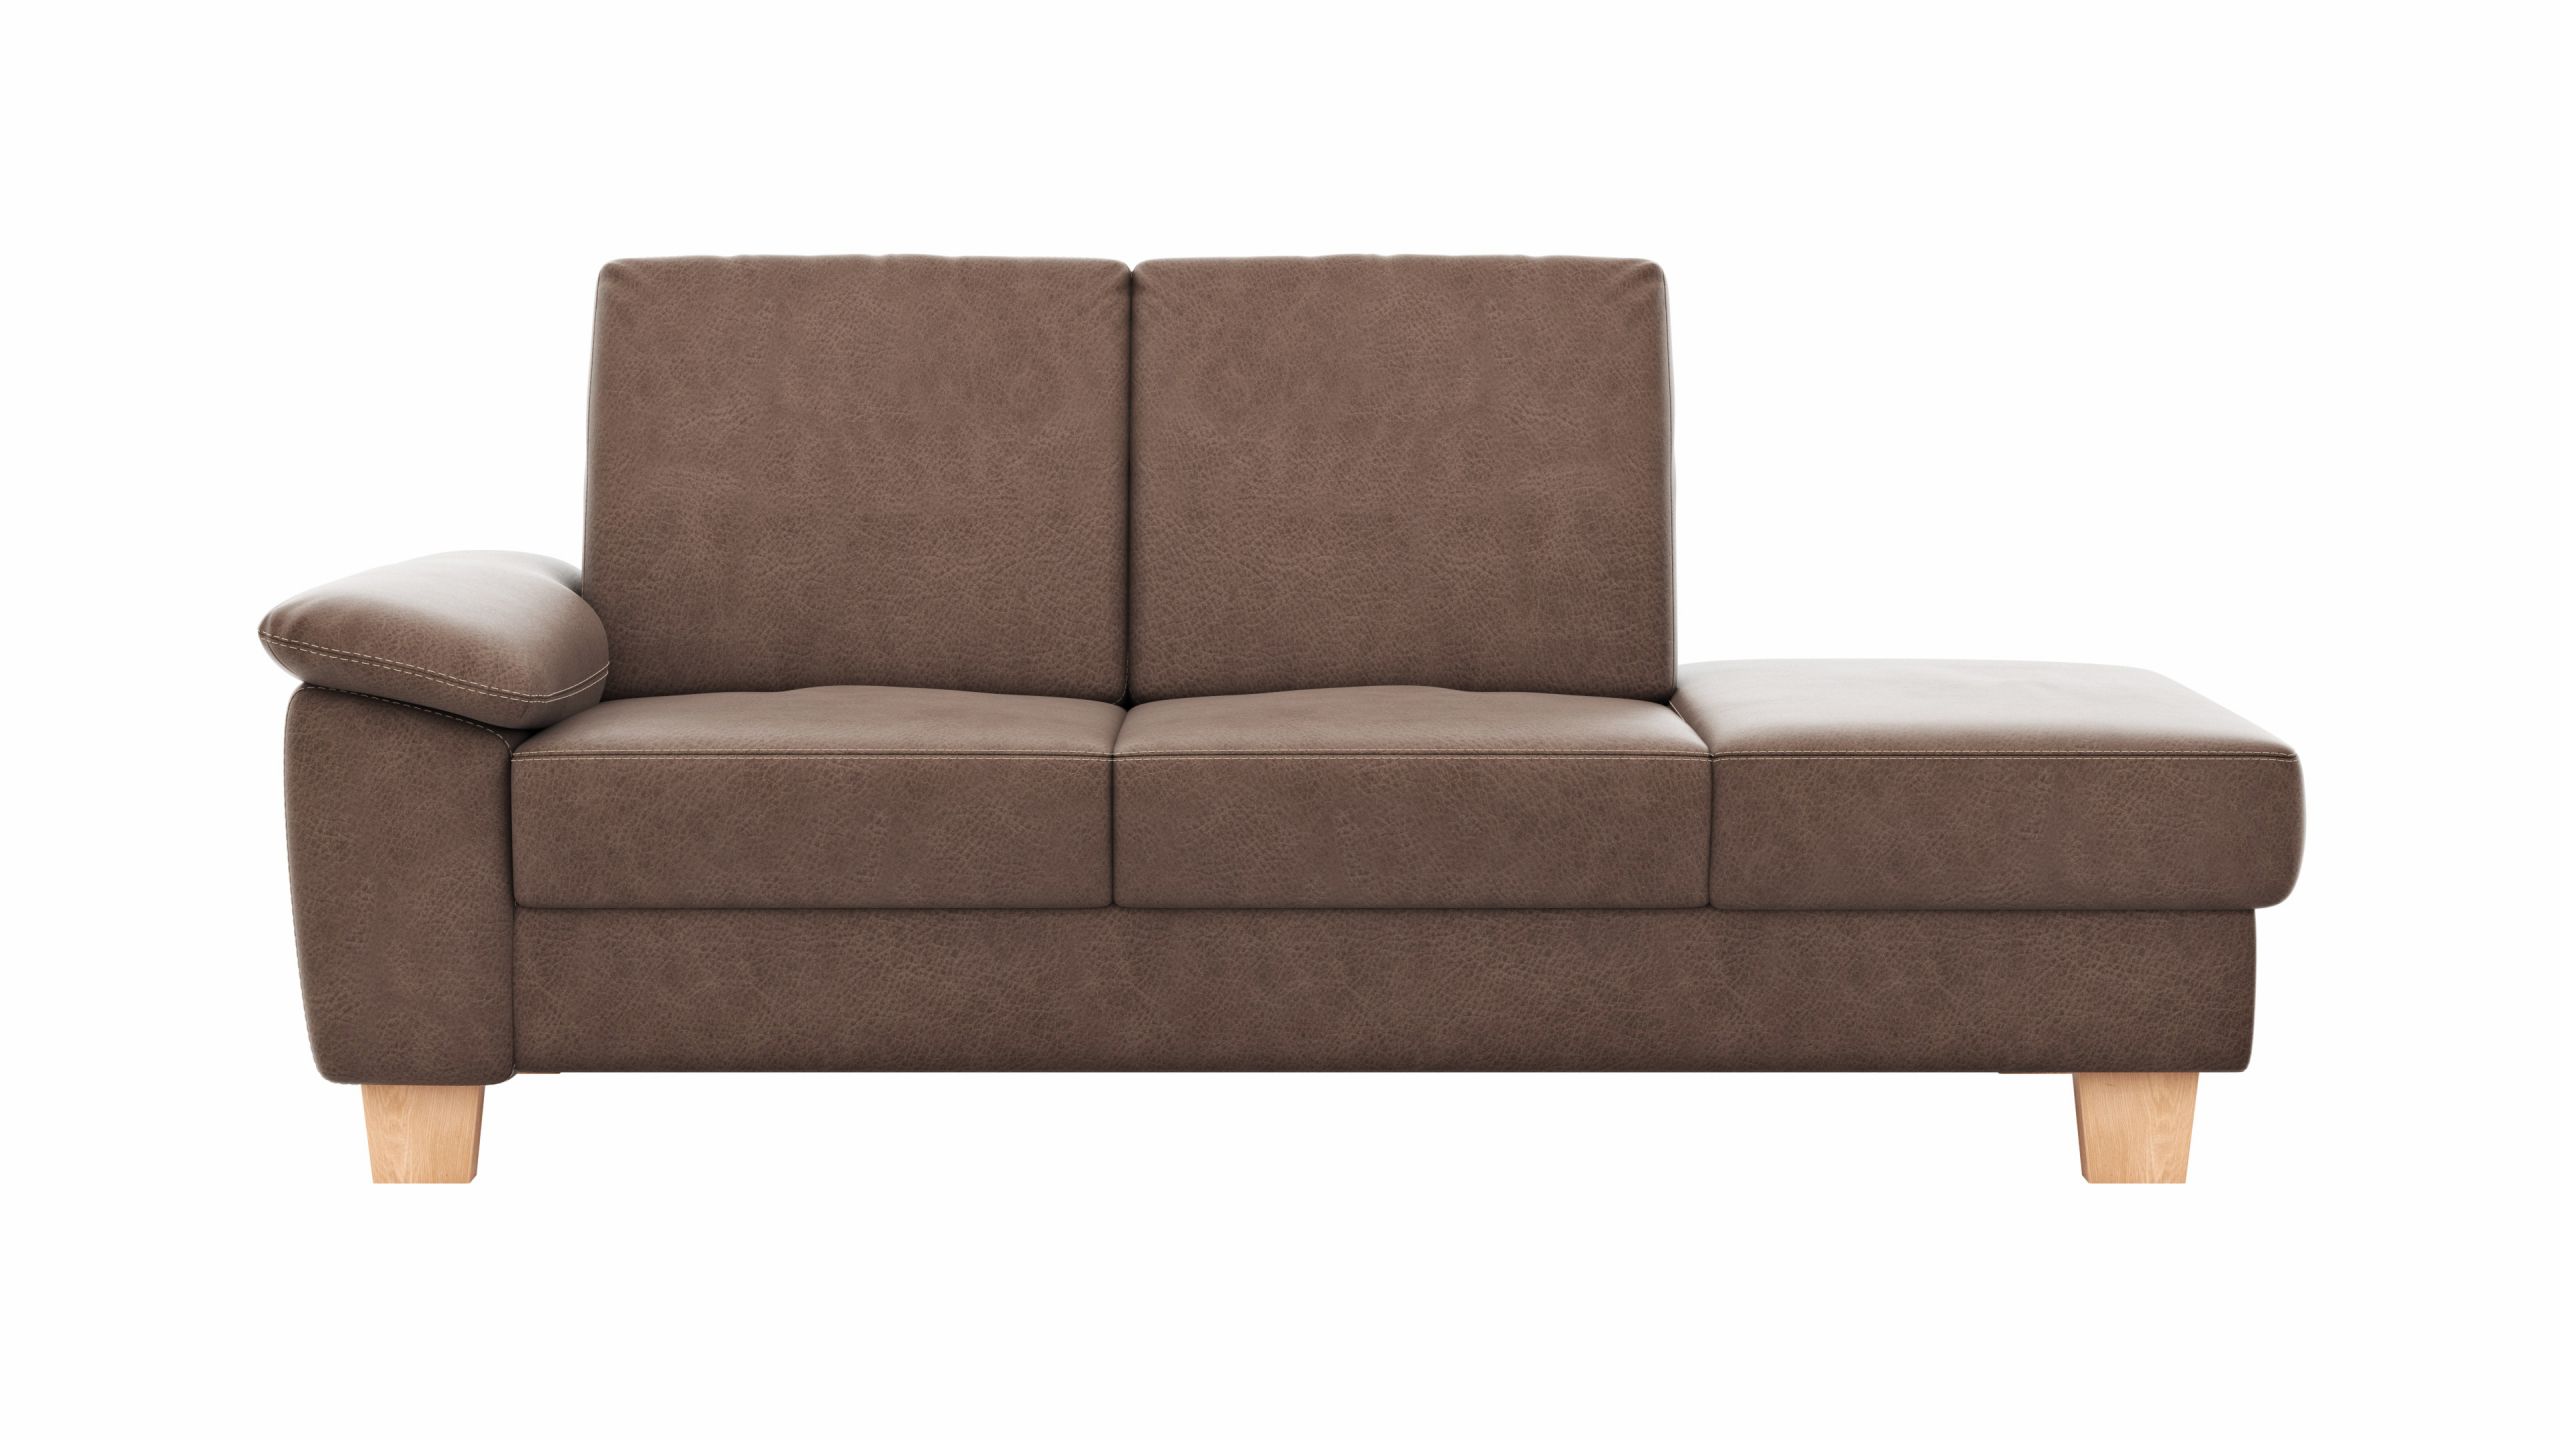 Sofa Stonington Country – Recamiere links inkl. Sitzvorzug (motorisch), Stoff, Braun